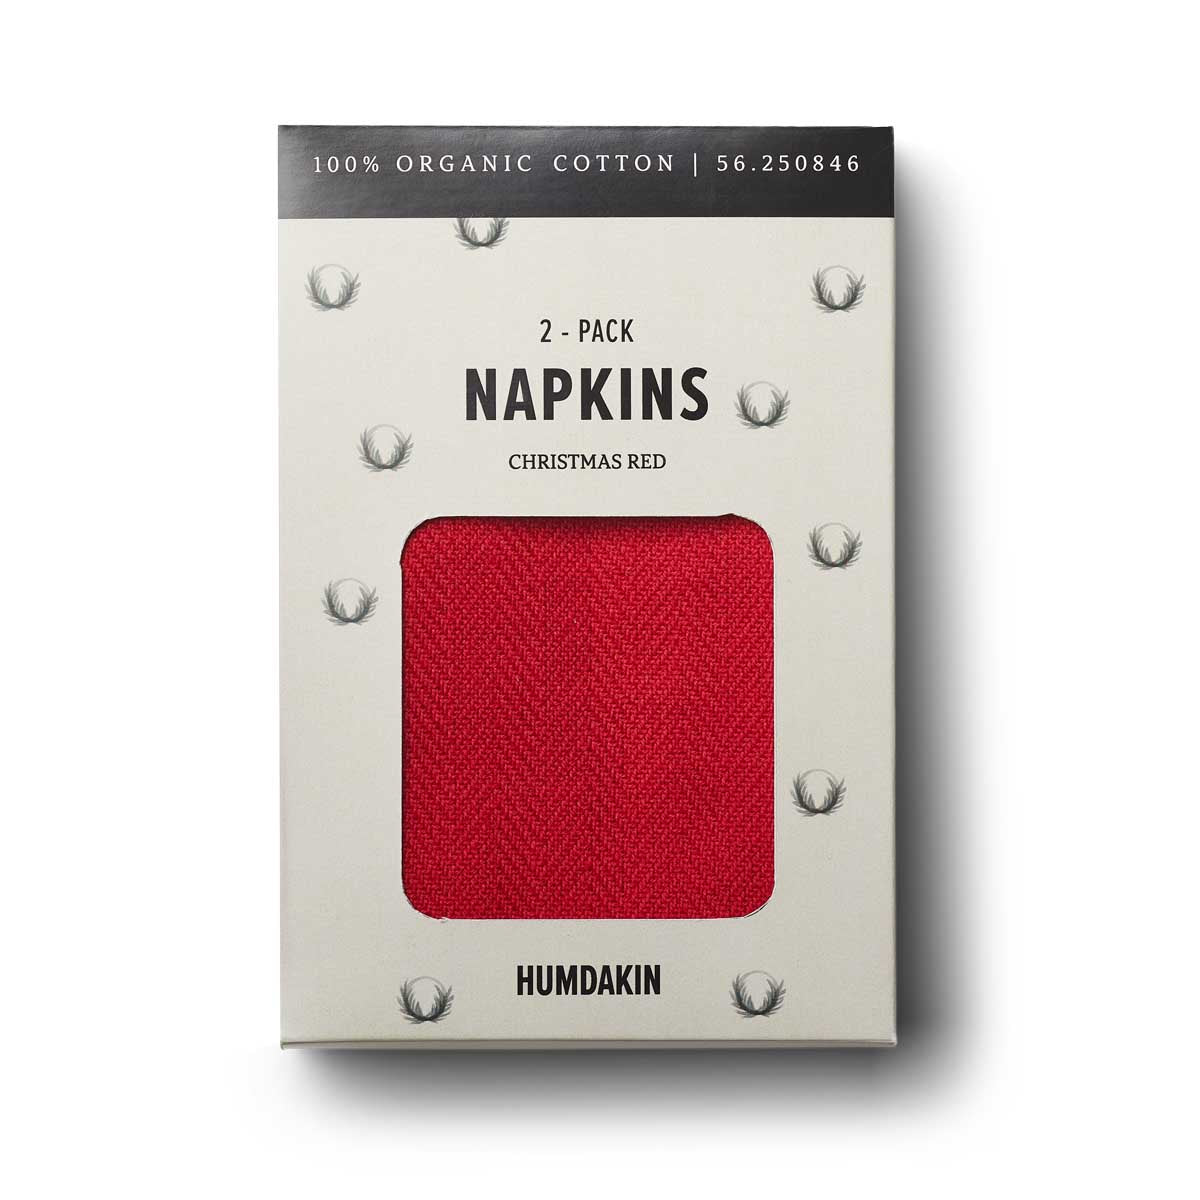 HUMDAKIN Napkins - 2 pack Organic textiles 118 Christmas Red